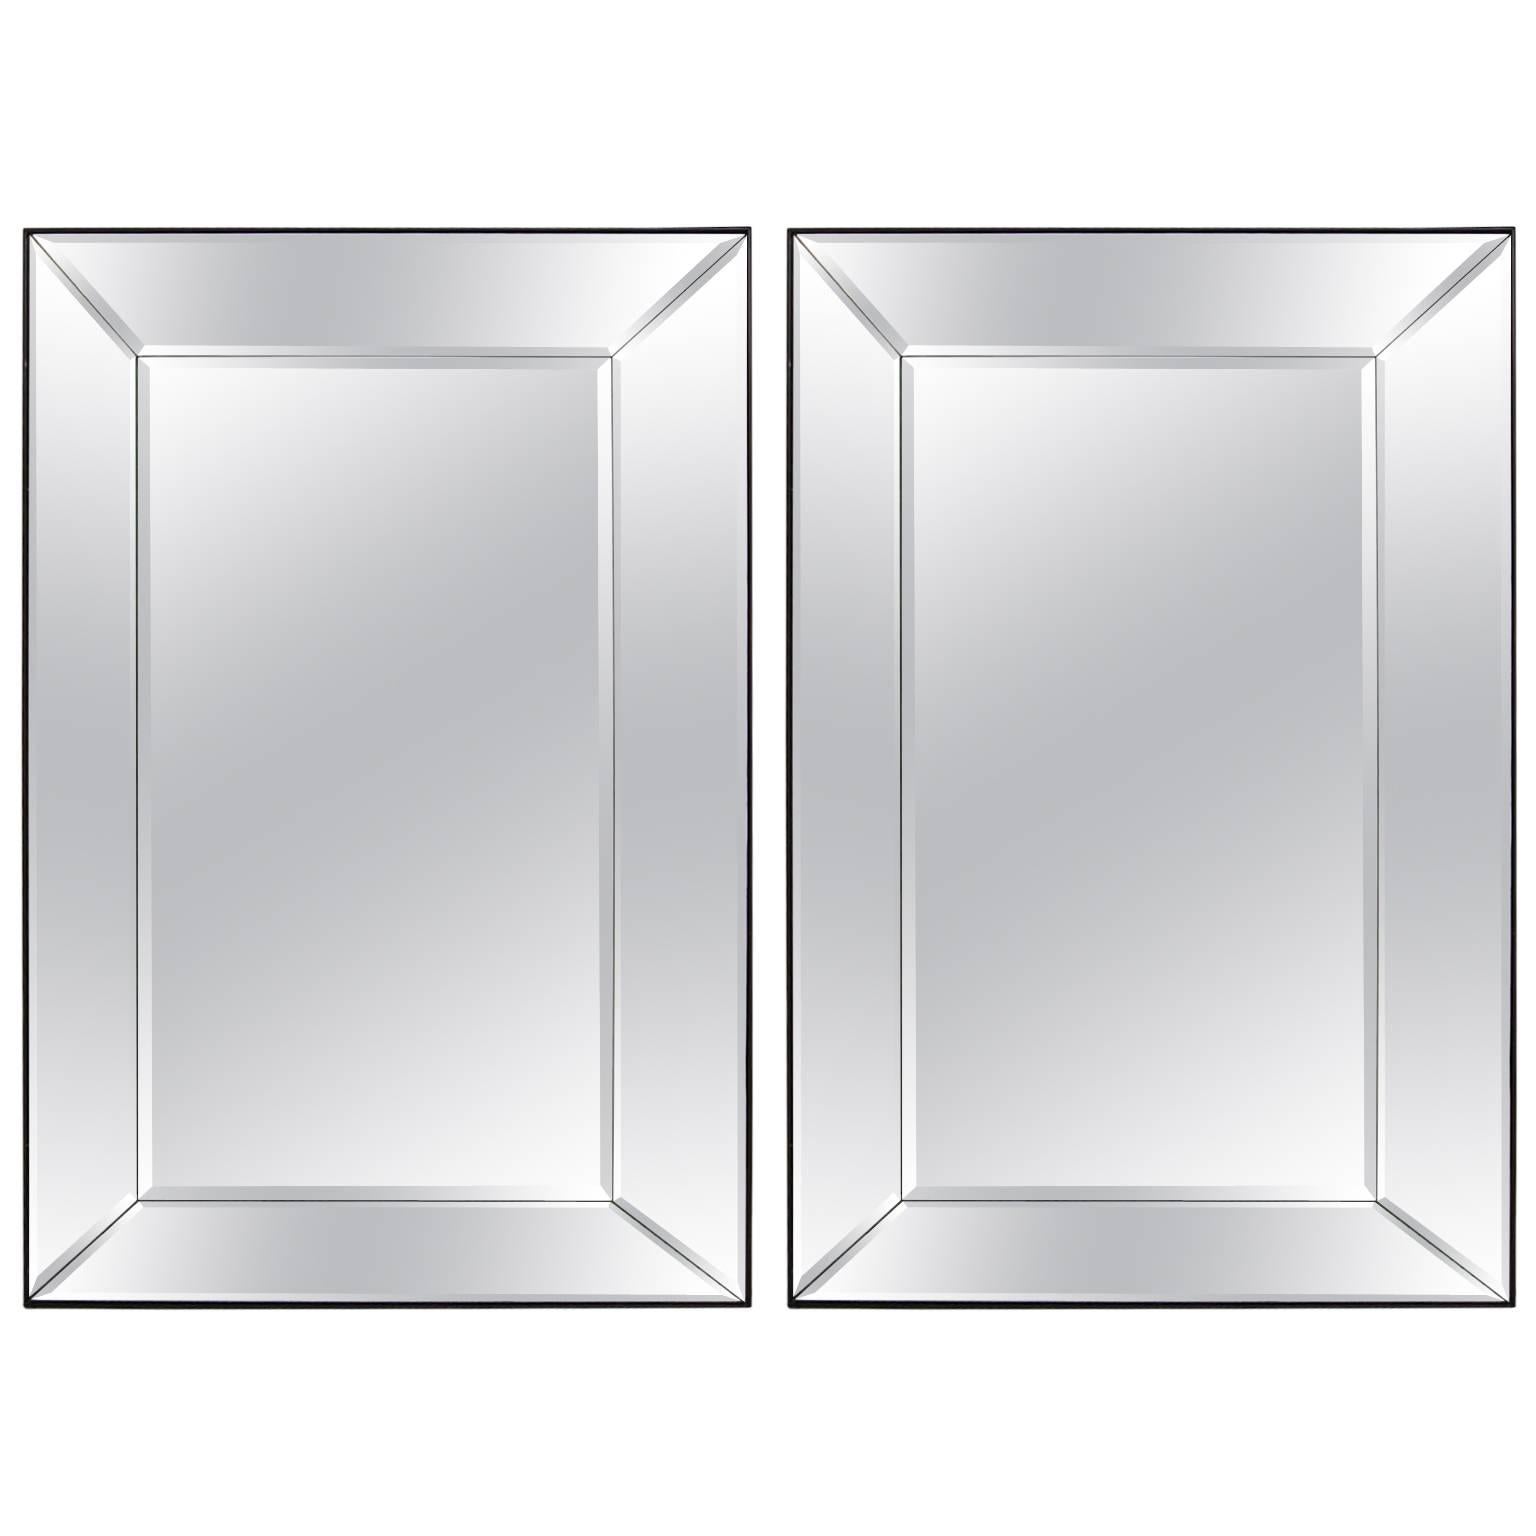 Pair of 5 Panel Beveled Mirrors